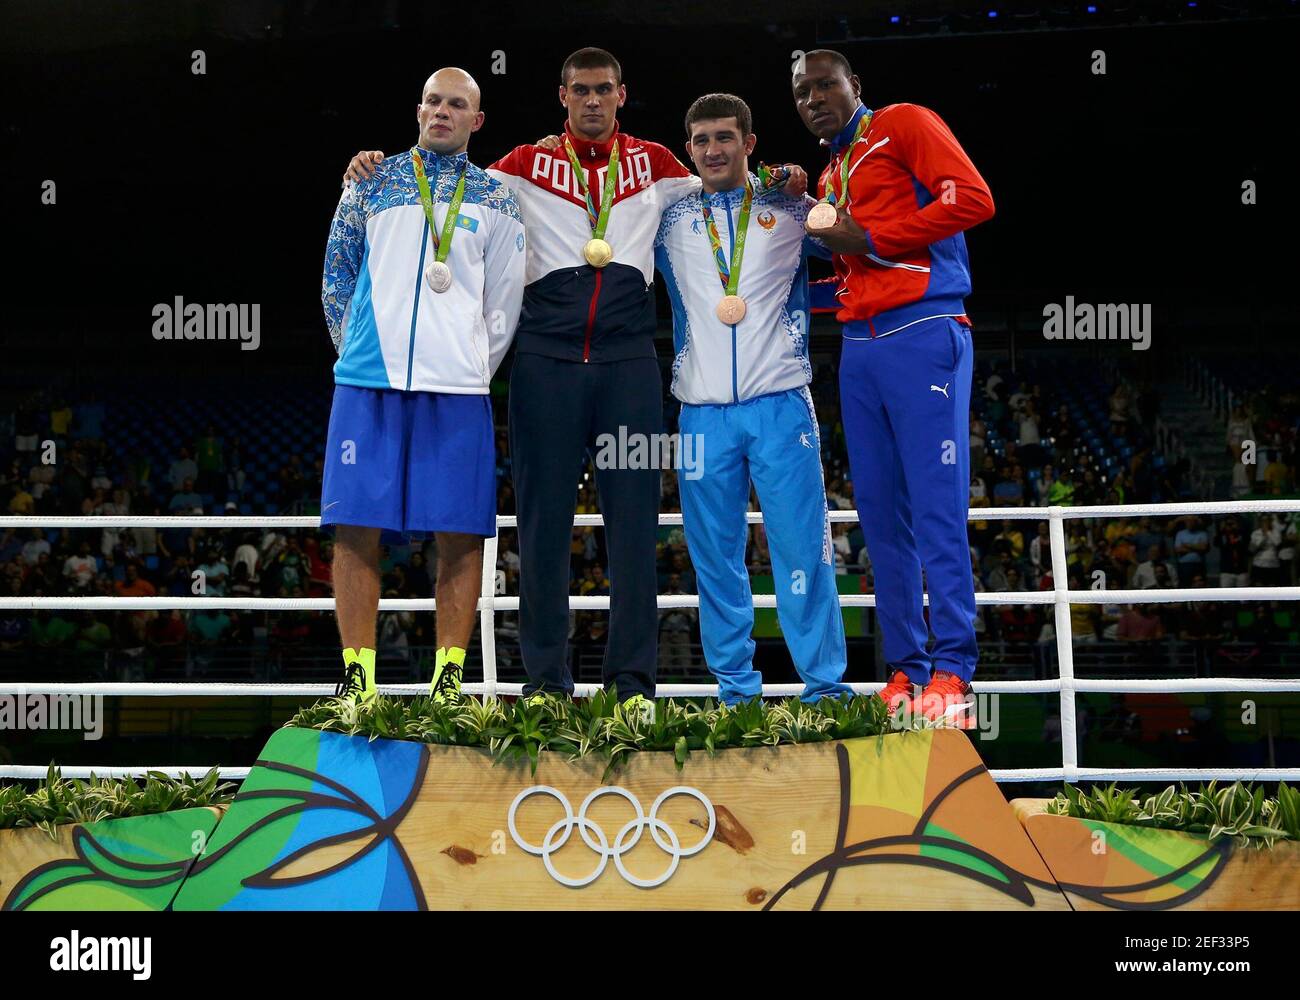 2016 Rio Olympics Boxing - Victory Ceremony - Men's Heavy (91kg) Victory Ceremony - Riocentro - Pavilion 6 - Rio de Janeiro, Brazil - 15/08/2016. (From L) Silver medalist Vassiliy Levit (